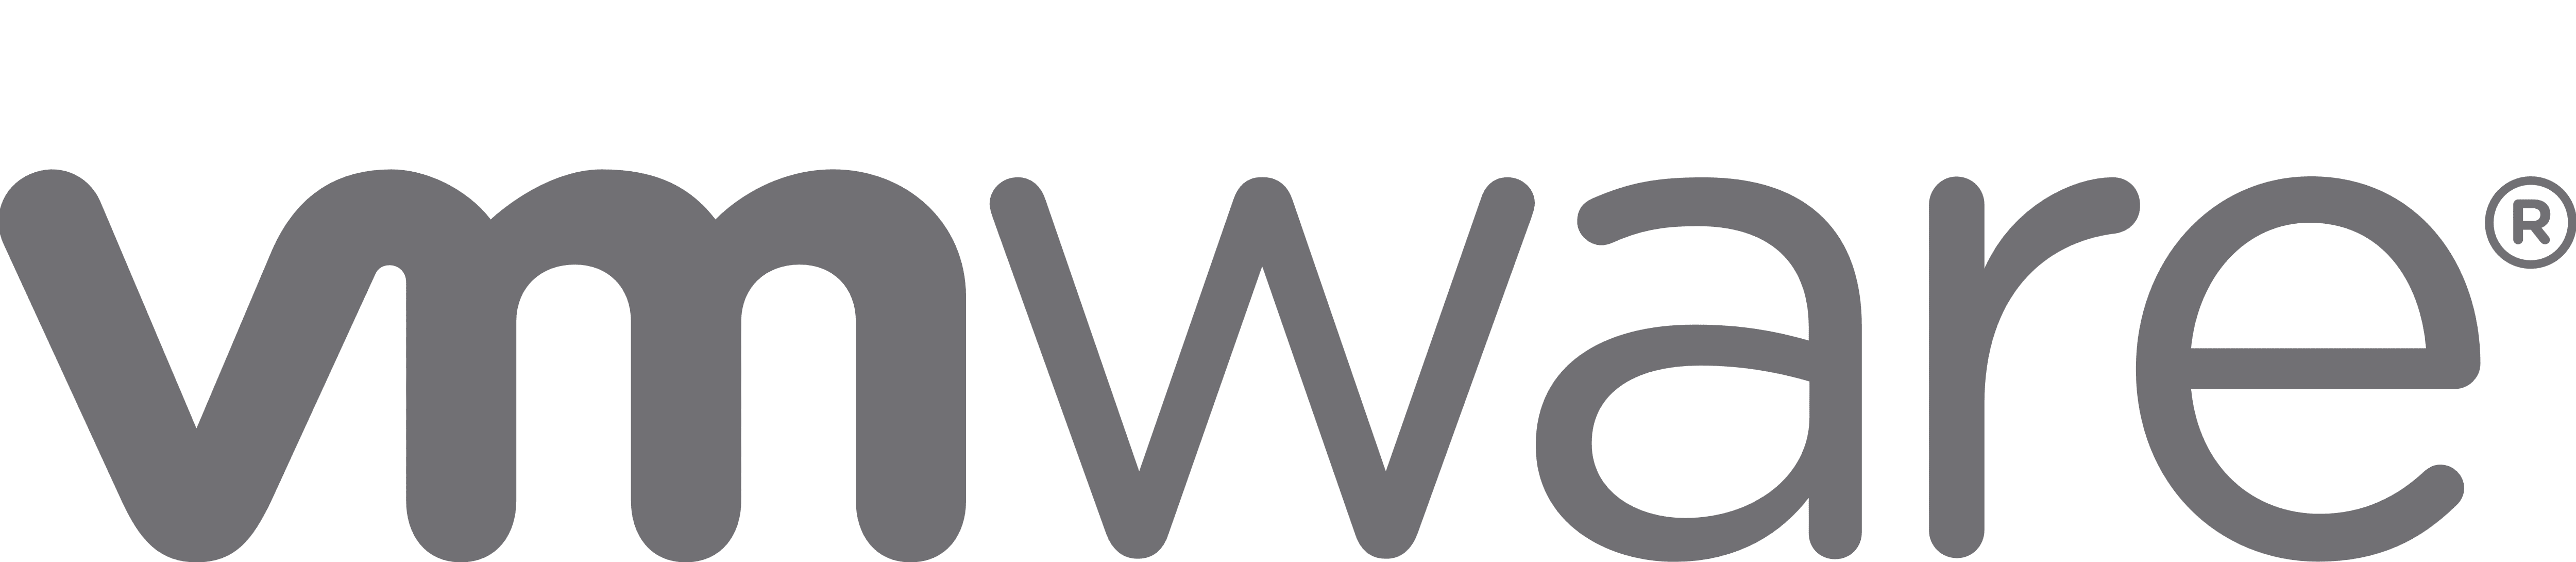 VMware Logo - Vmware Vsphere Logo Wwwpixsharkcom Images Galleries Logo Image ...